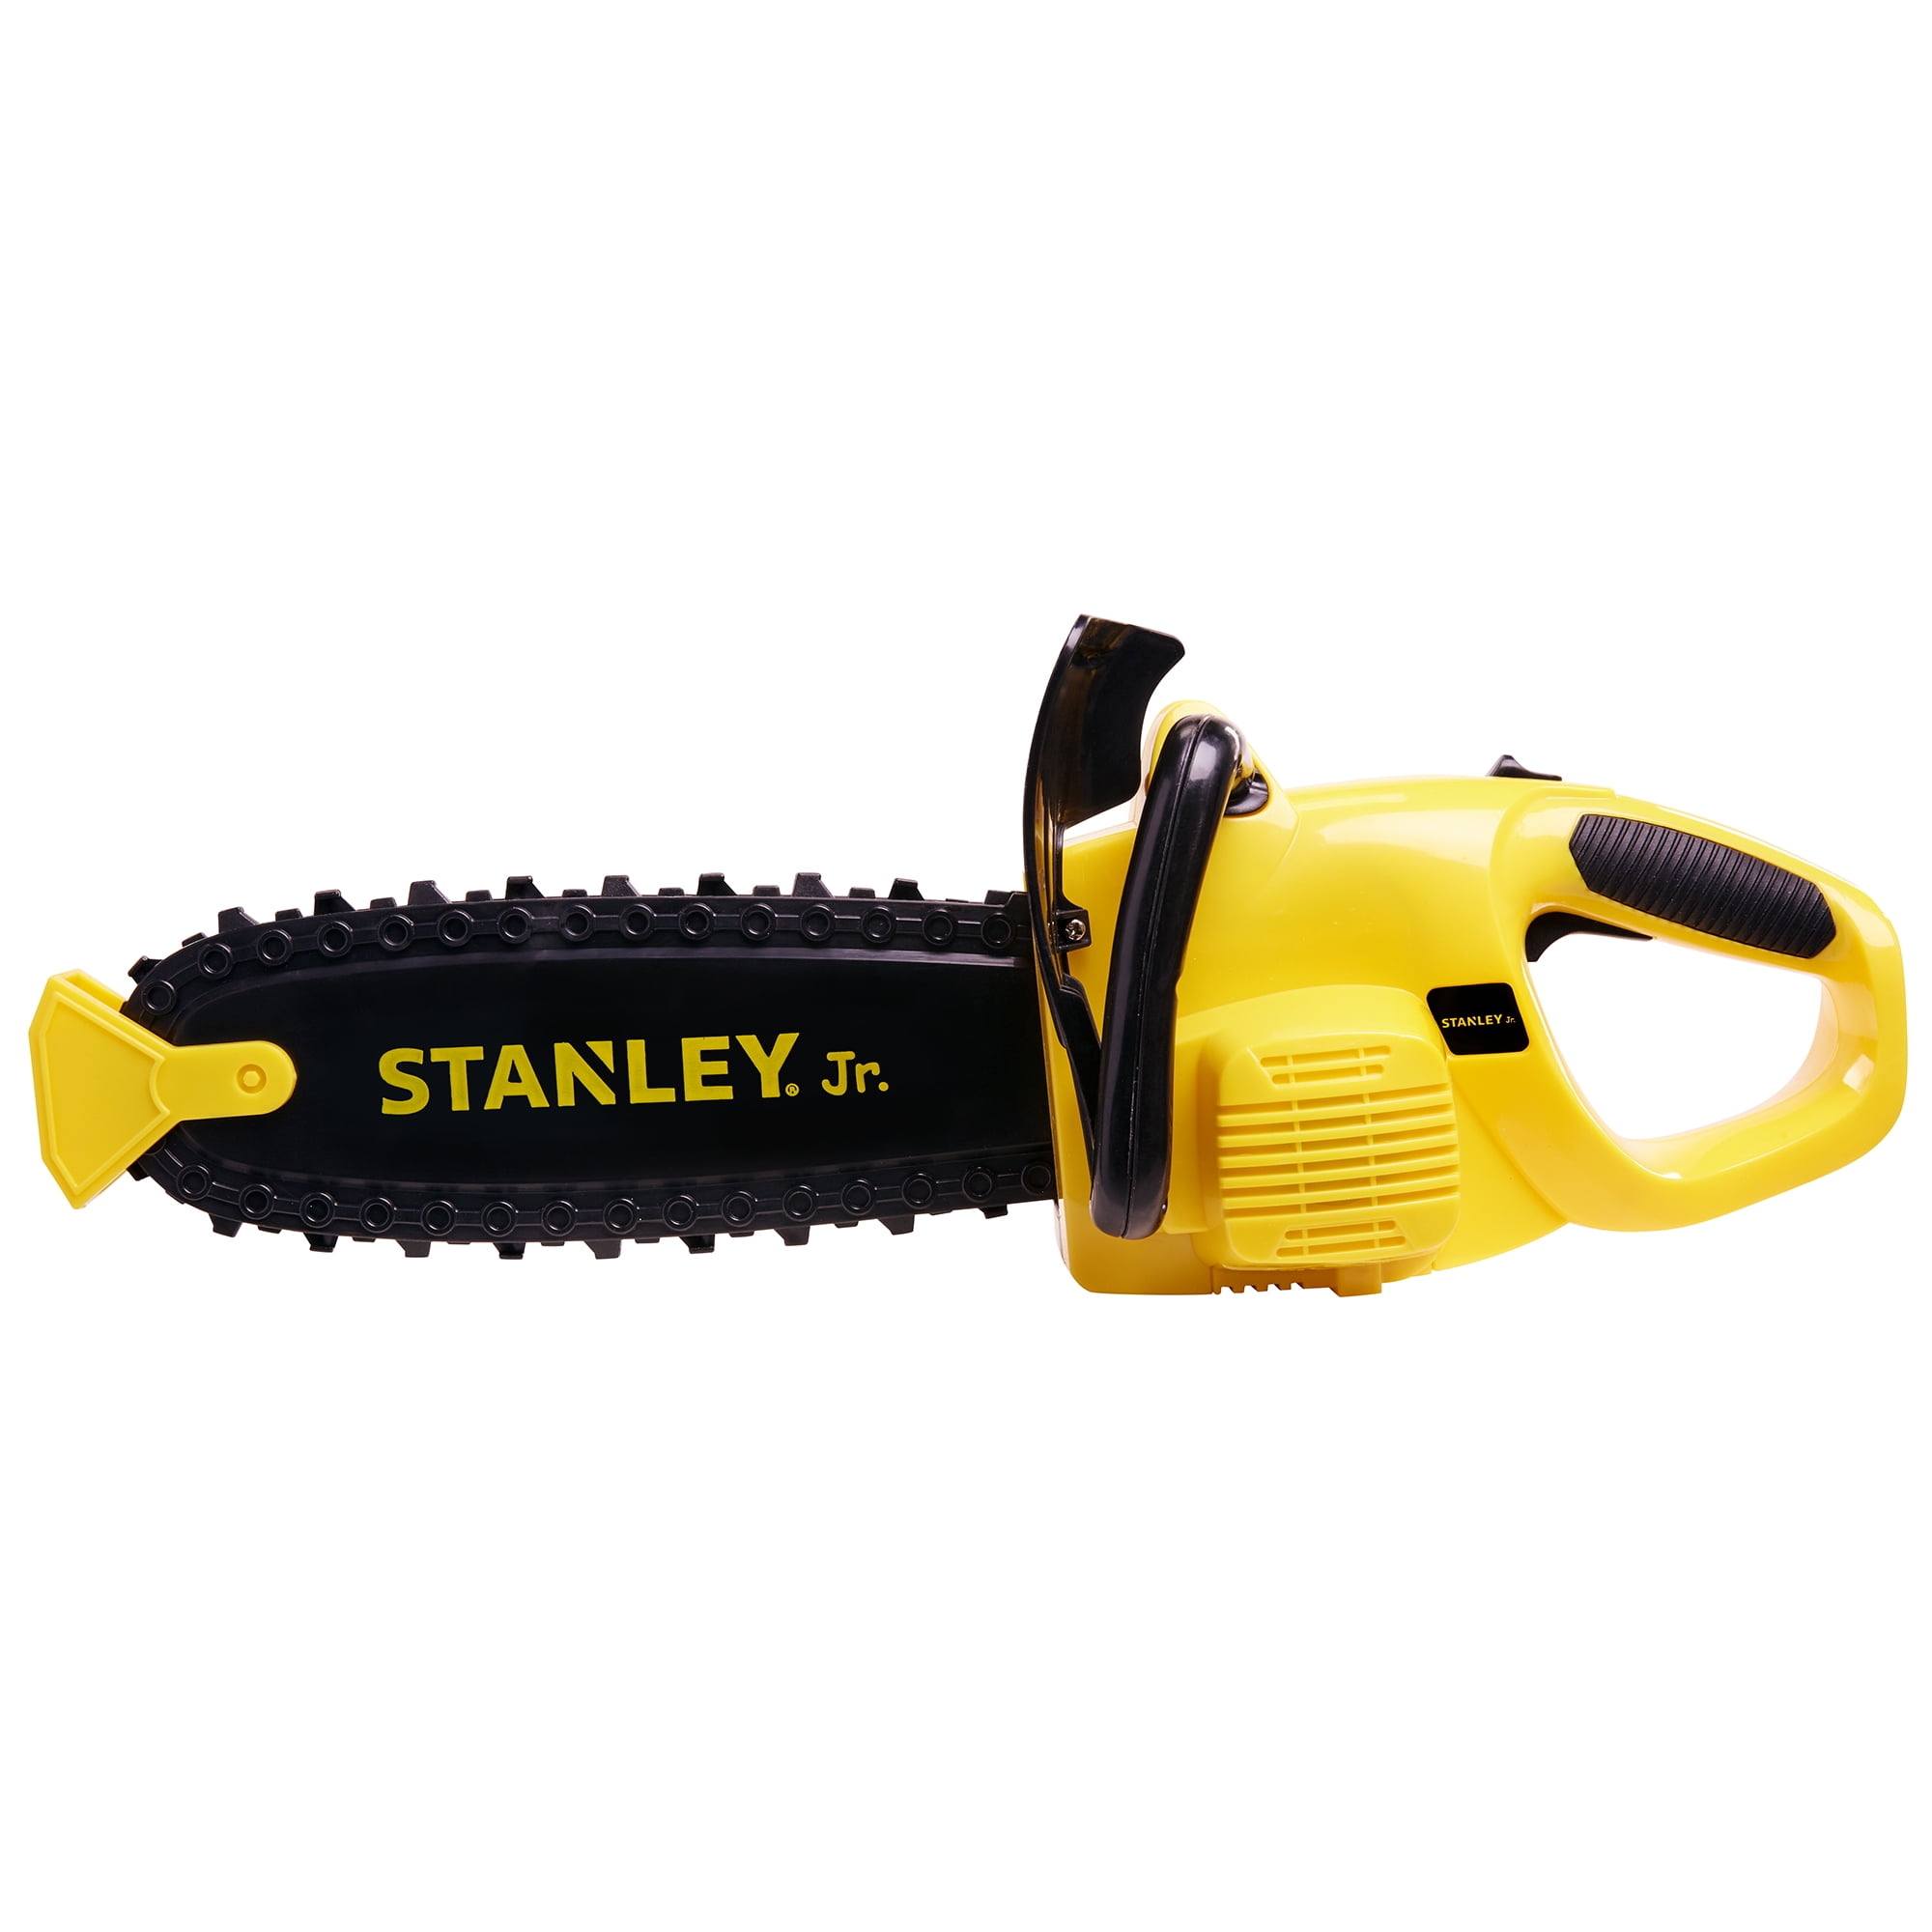 Stanley Jr. Toy Chainsaw - Walmart.com 